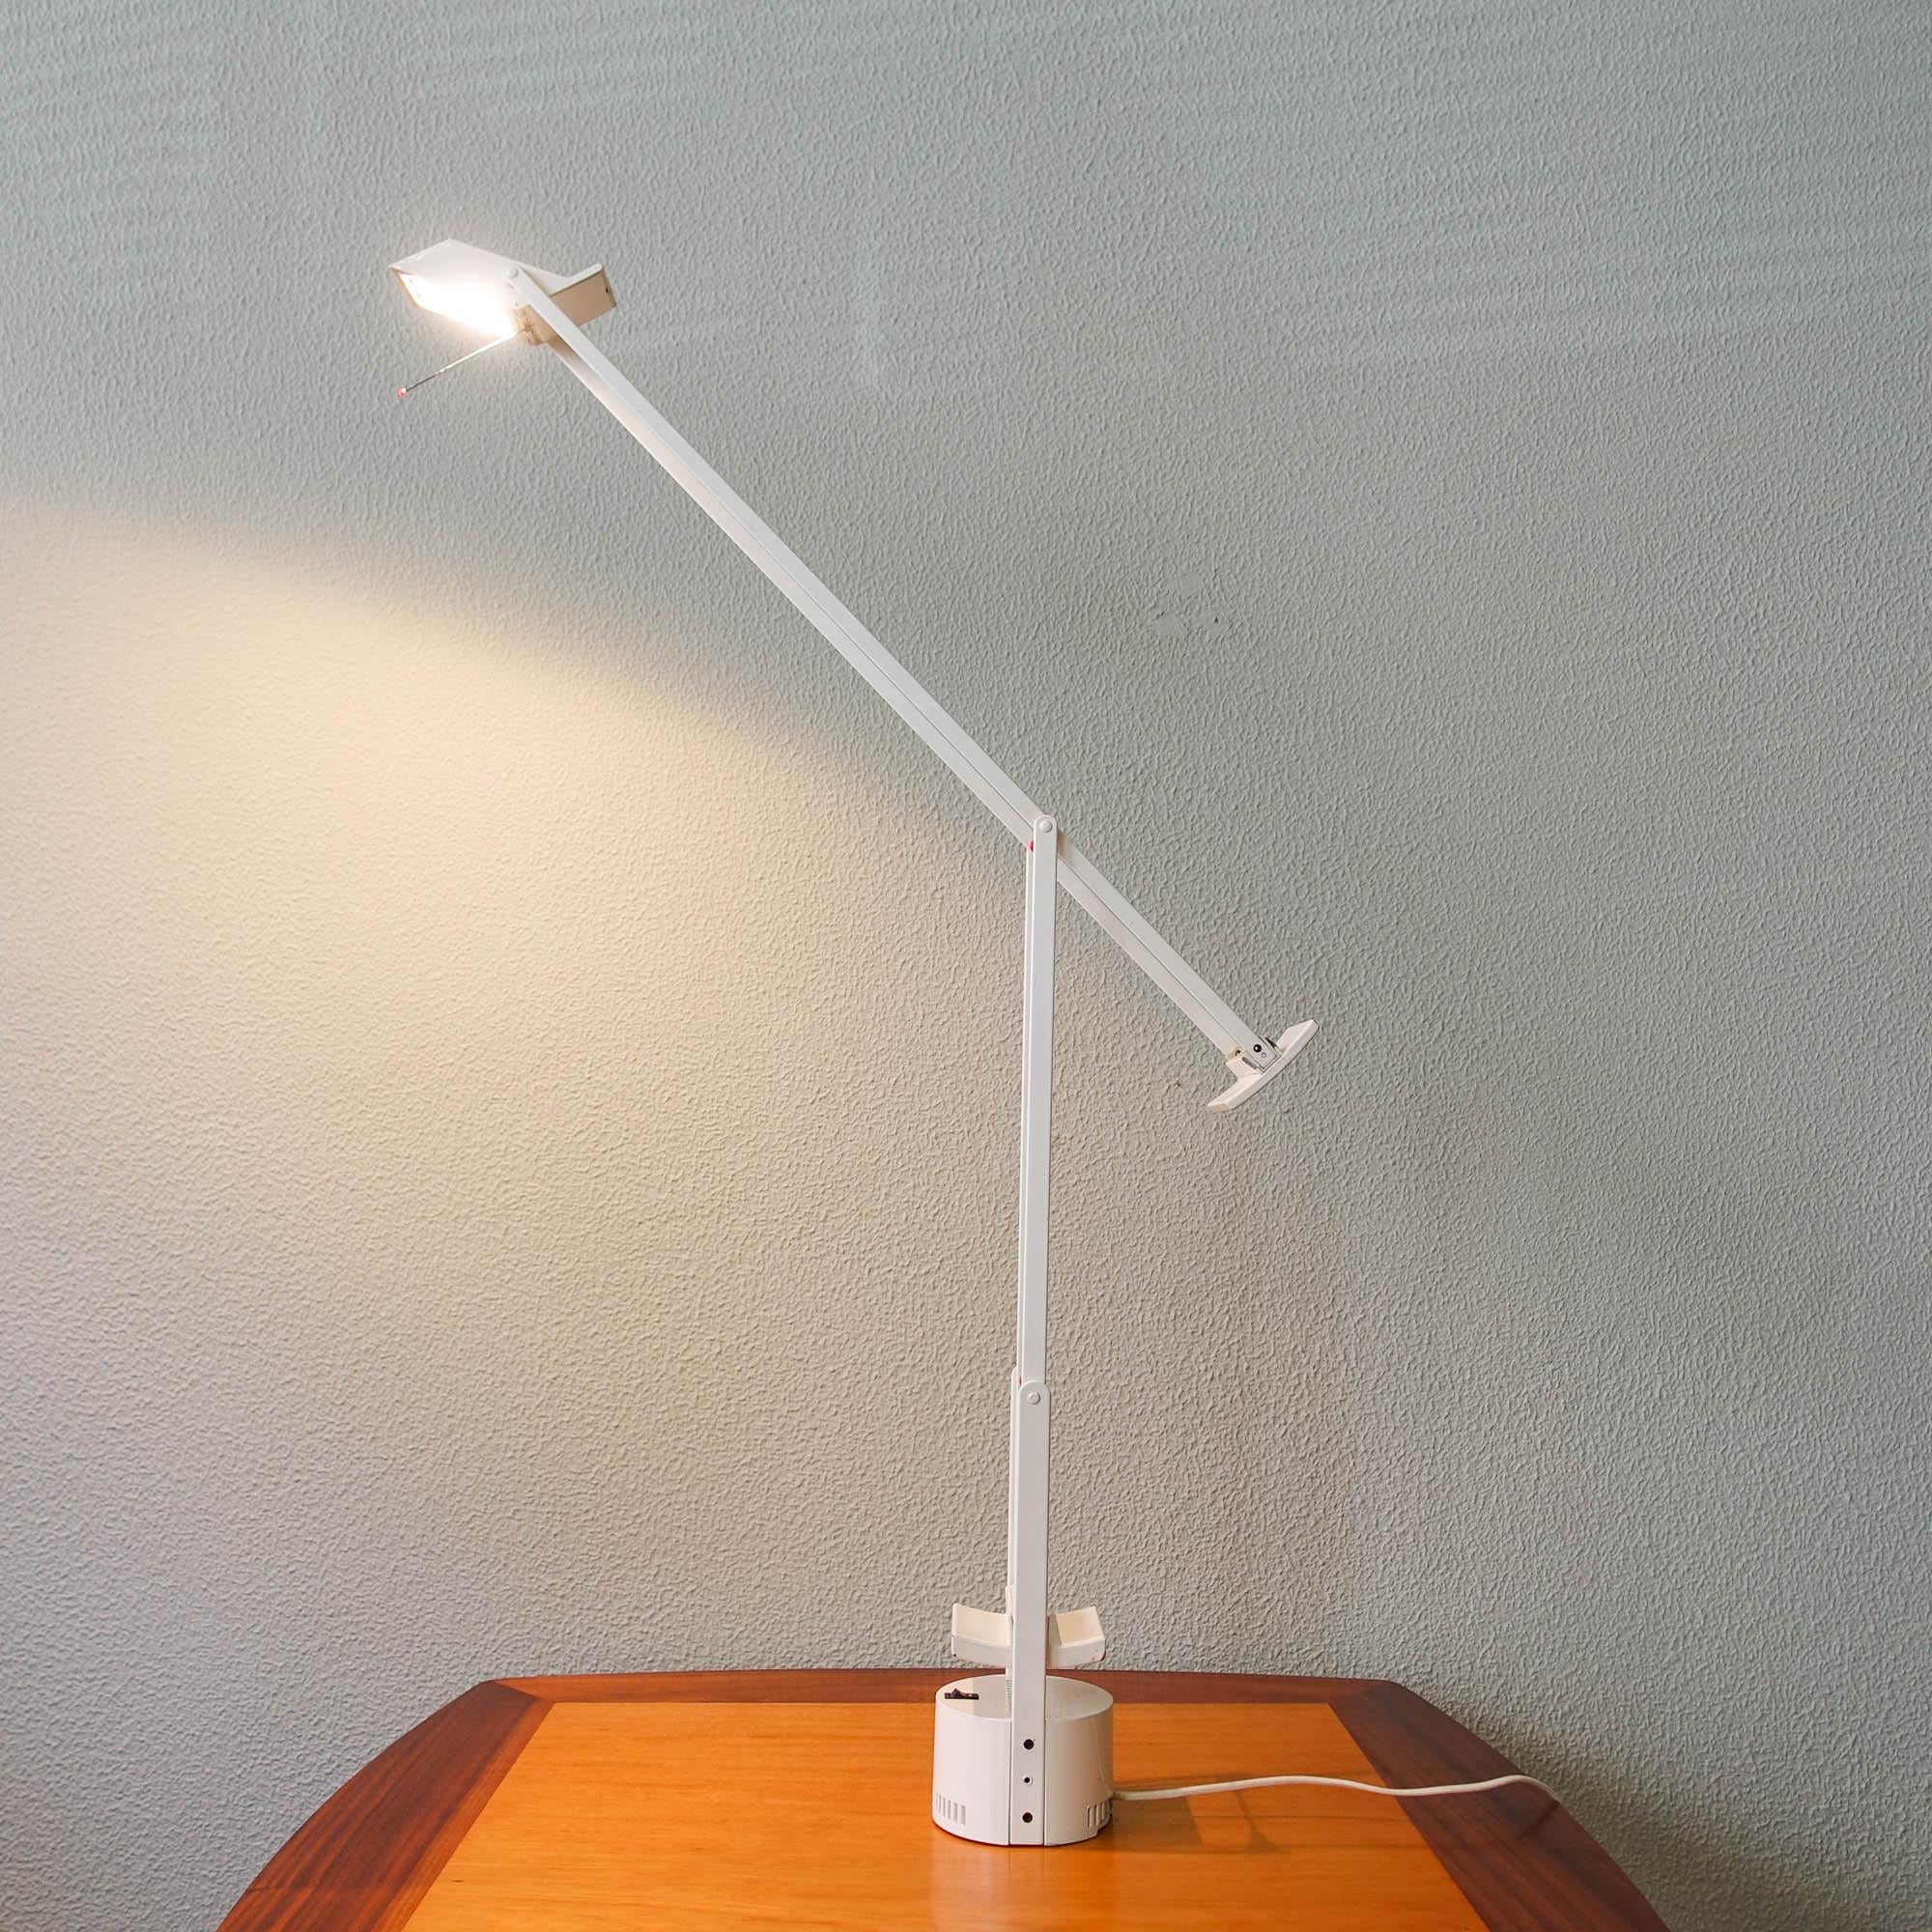 Aluminum Richard Sapper ‘Tizio’ Table Lamp for  Artemide, Italy, 1972 For Sale